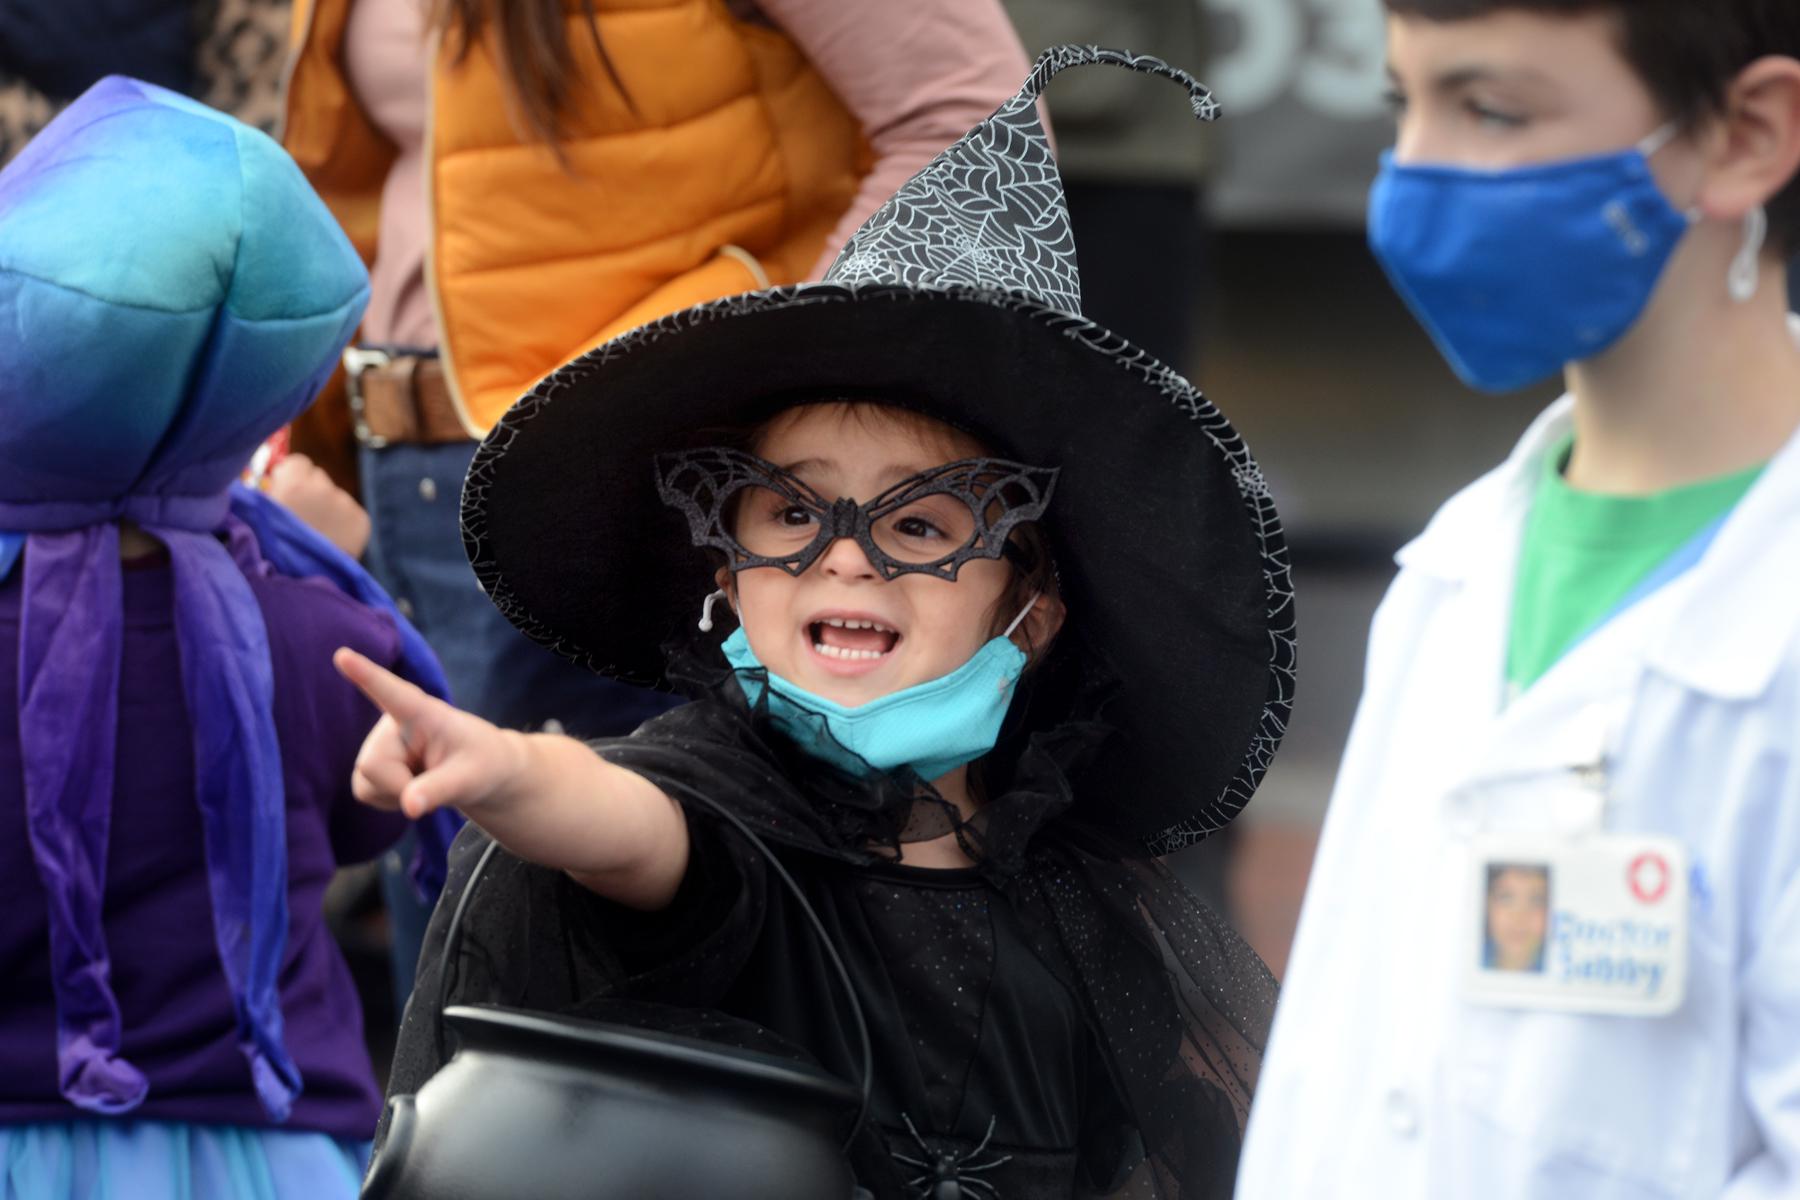 Westport celebrates Halloween with a parade